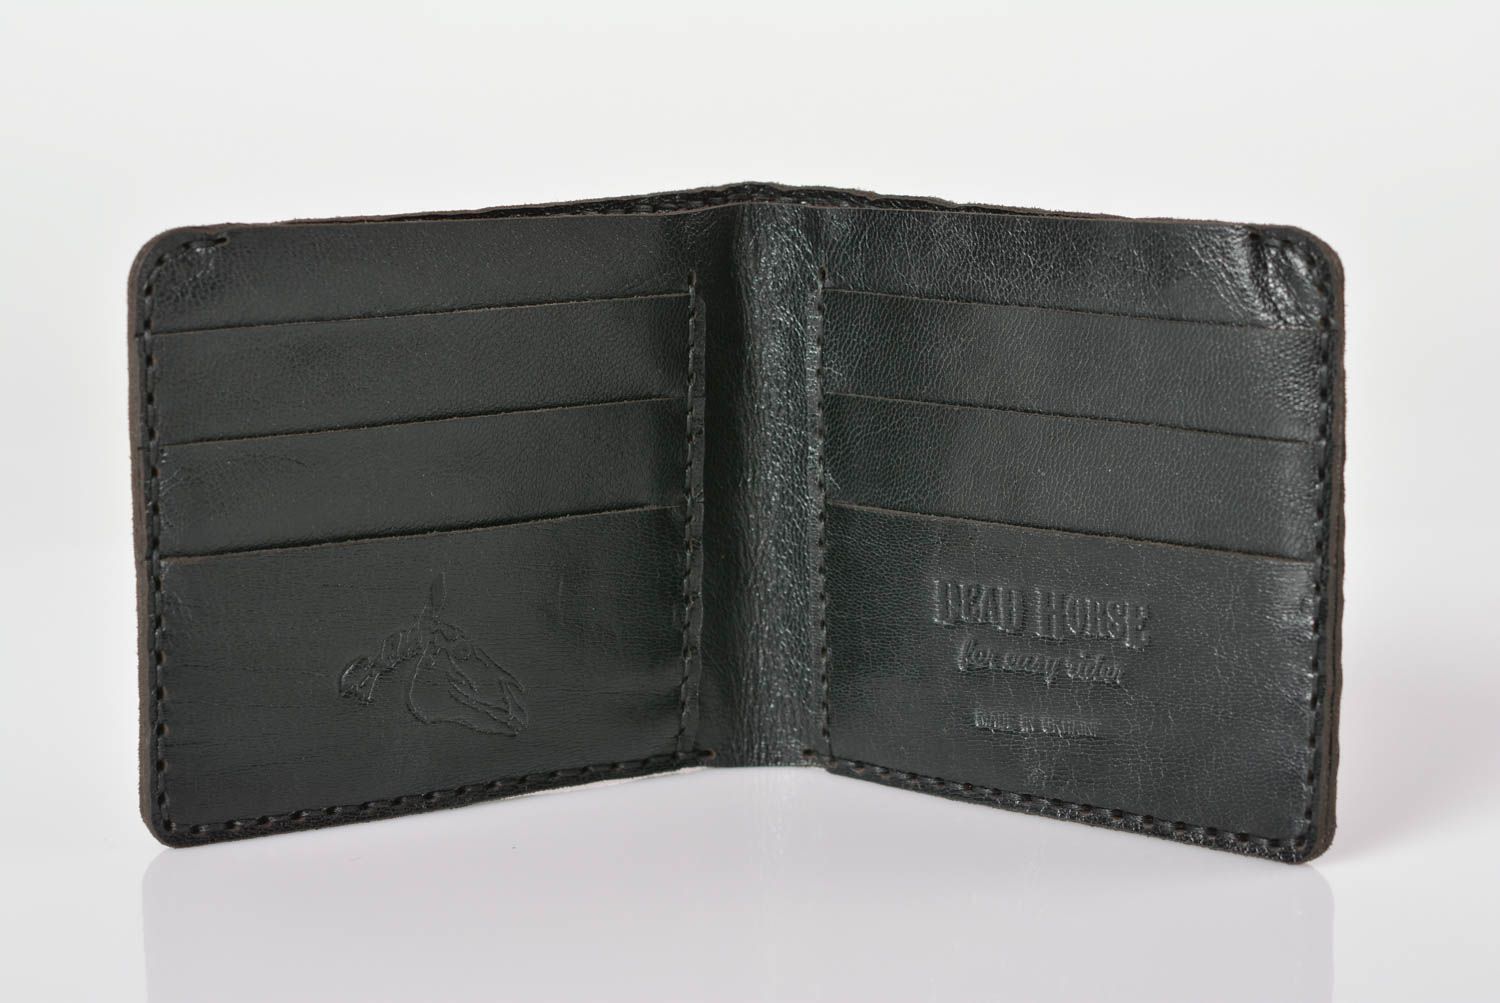 Handmade leather wallet designer wallets leather wallets for men gifts for him photo 2